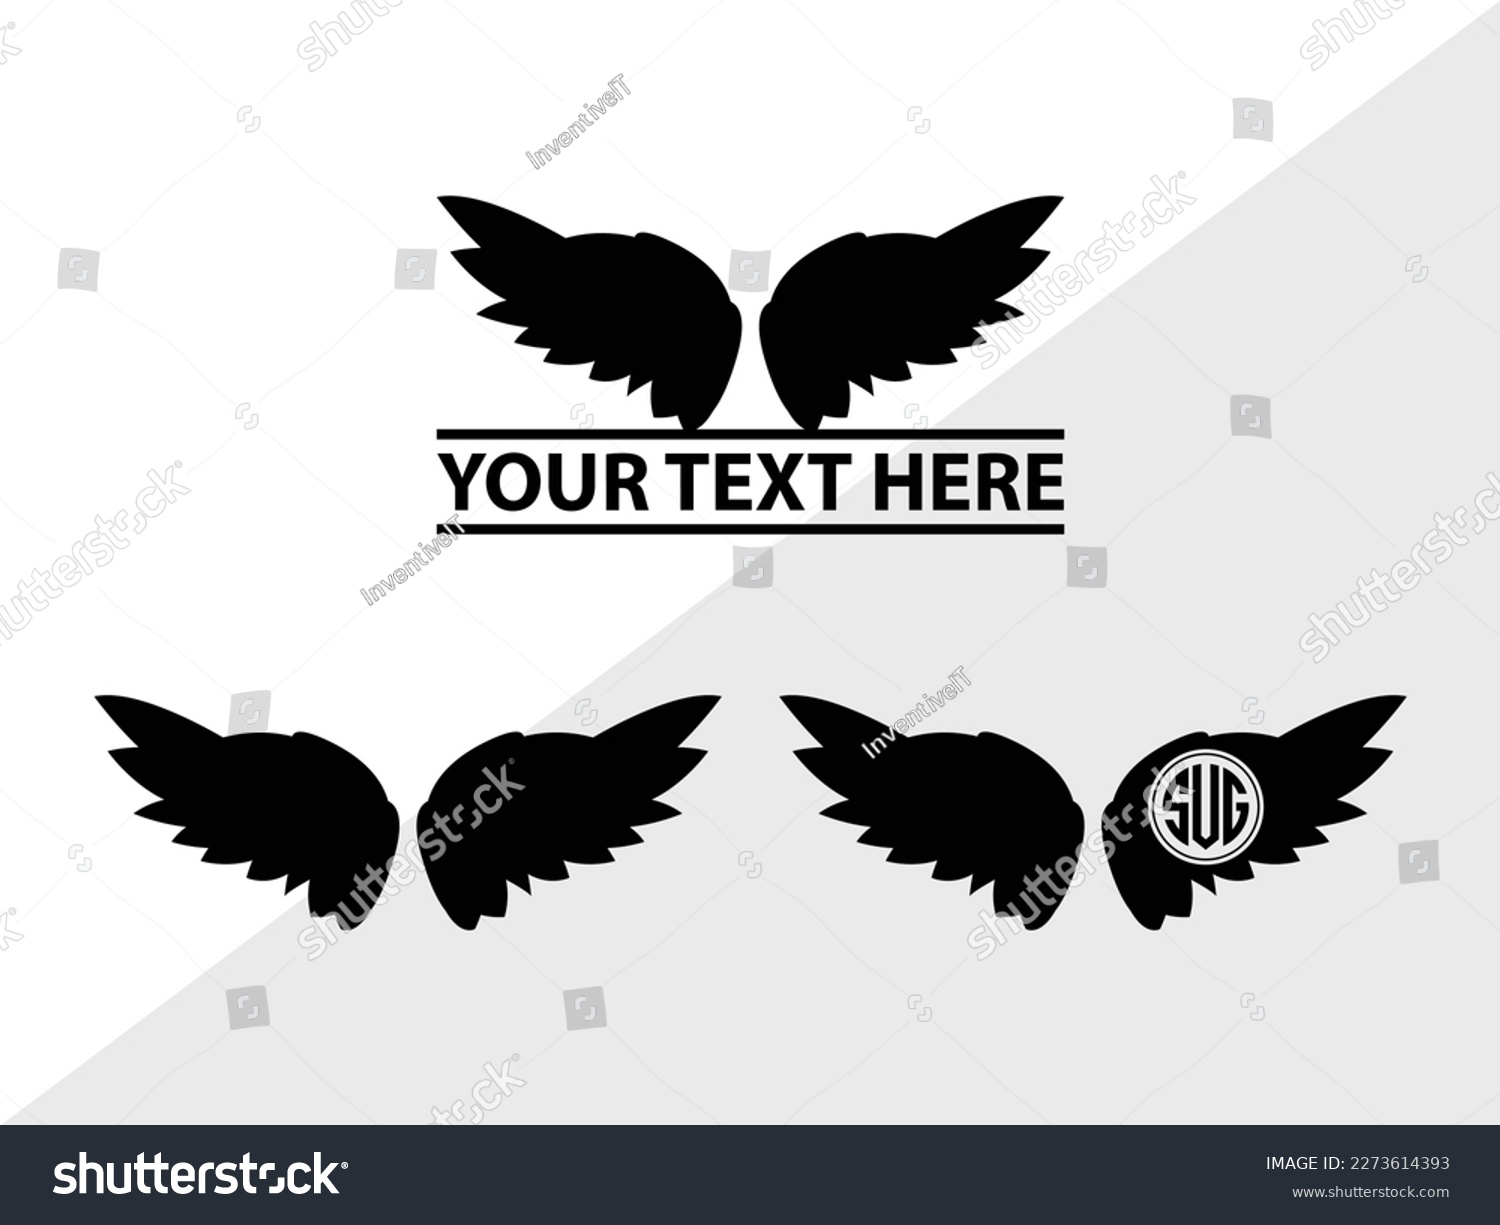 SVG of Angel Wings SVG Vector Illustration Silhouette svg